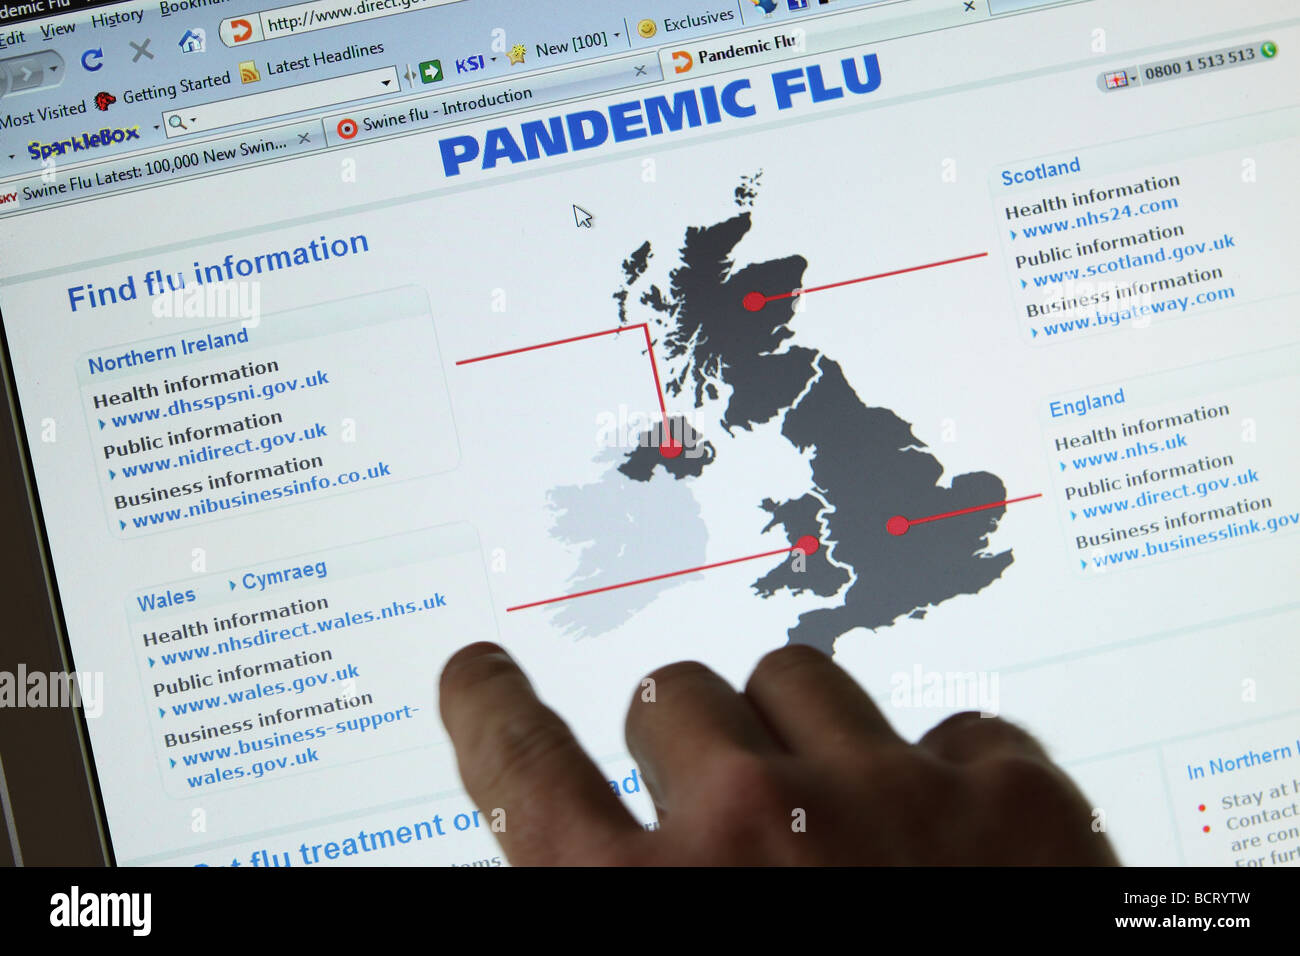 Swine Flu H1N1 UK Government Pandemic Flu information website went live on 24.7.09 screenshot Stock Photo